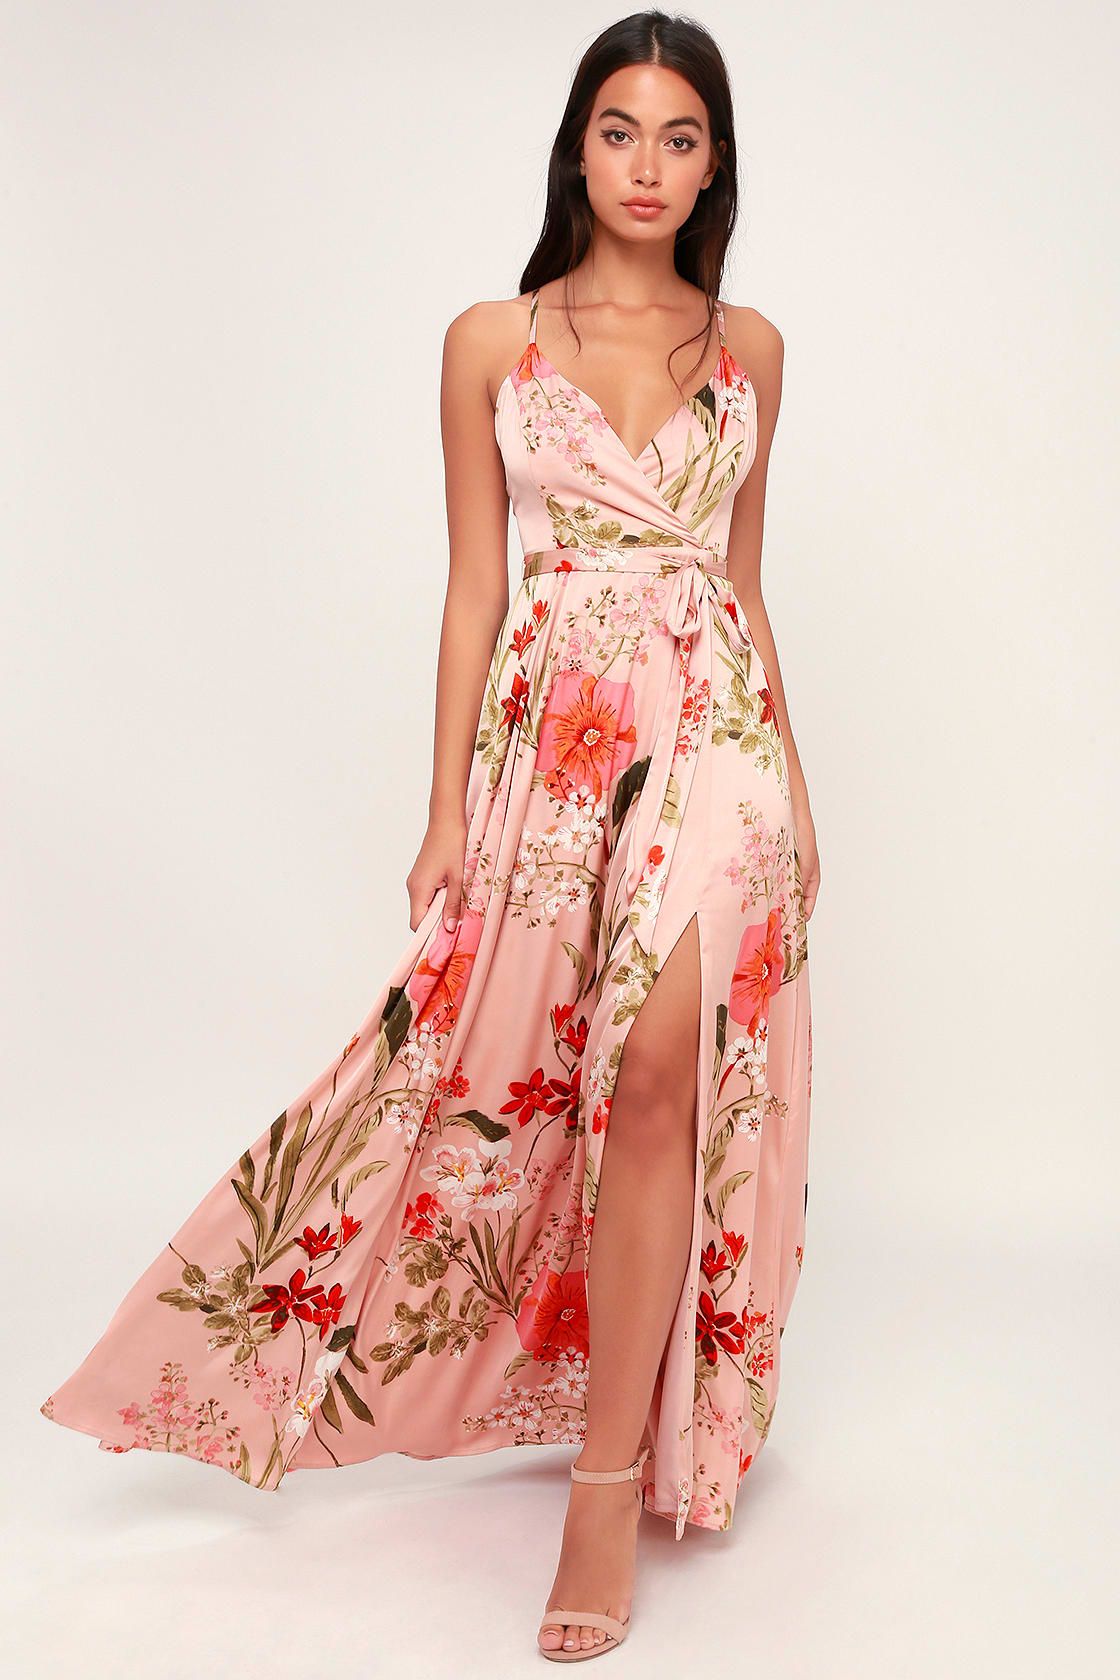 Cute Pink Satin Maxi Dress for Bachelorette Party Brunch